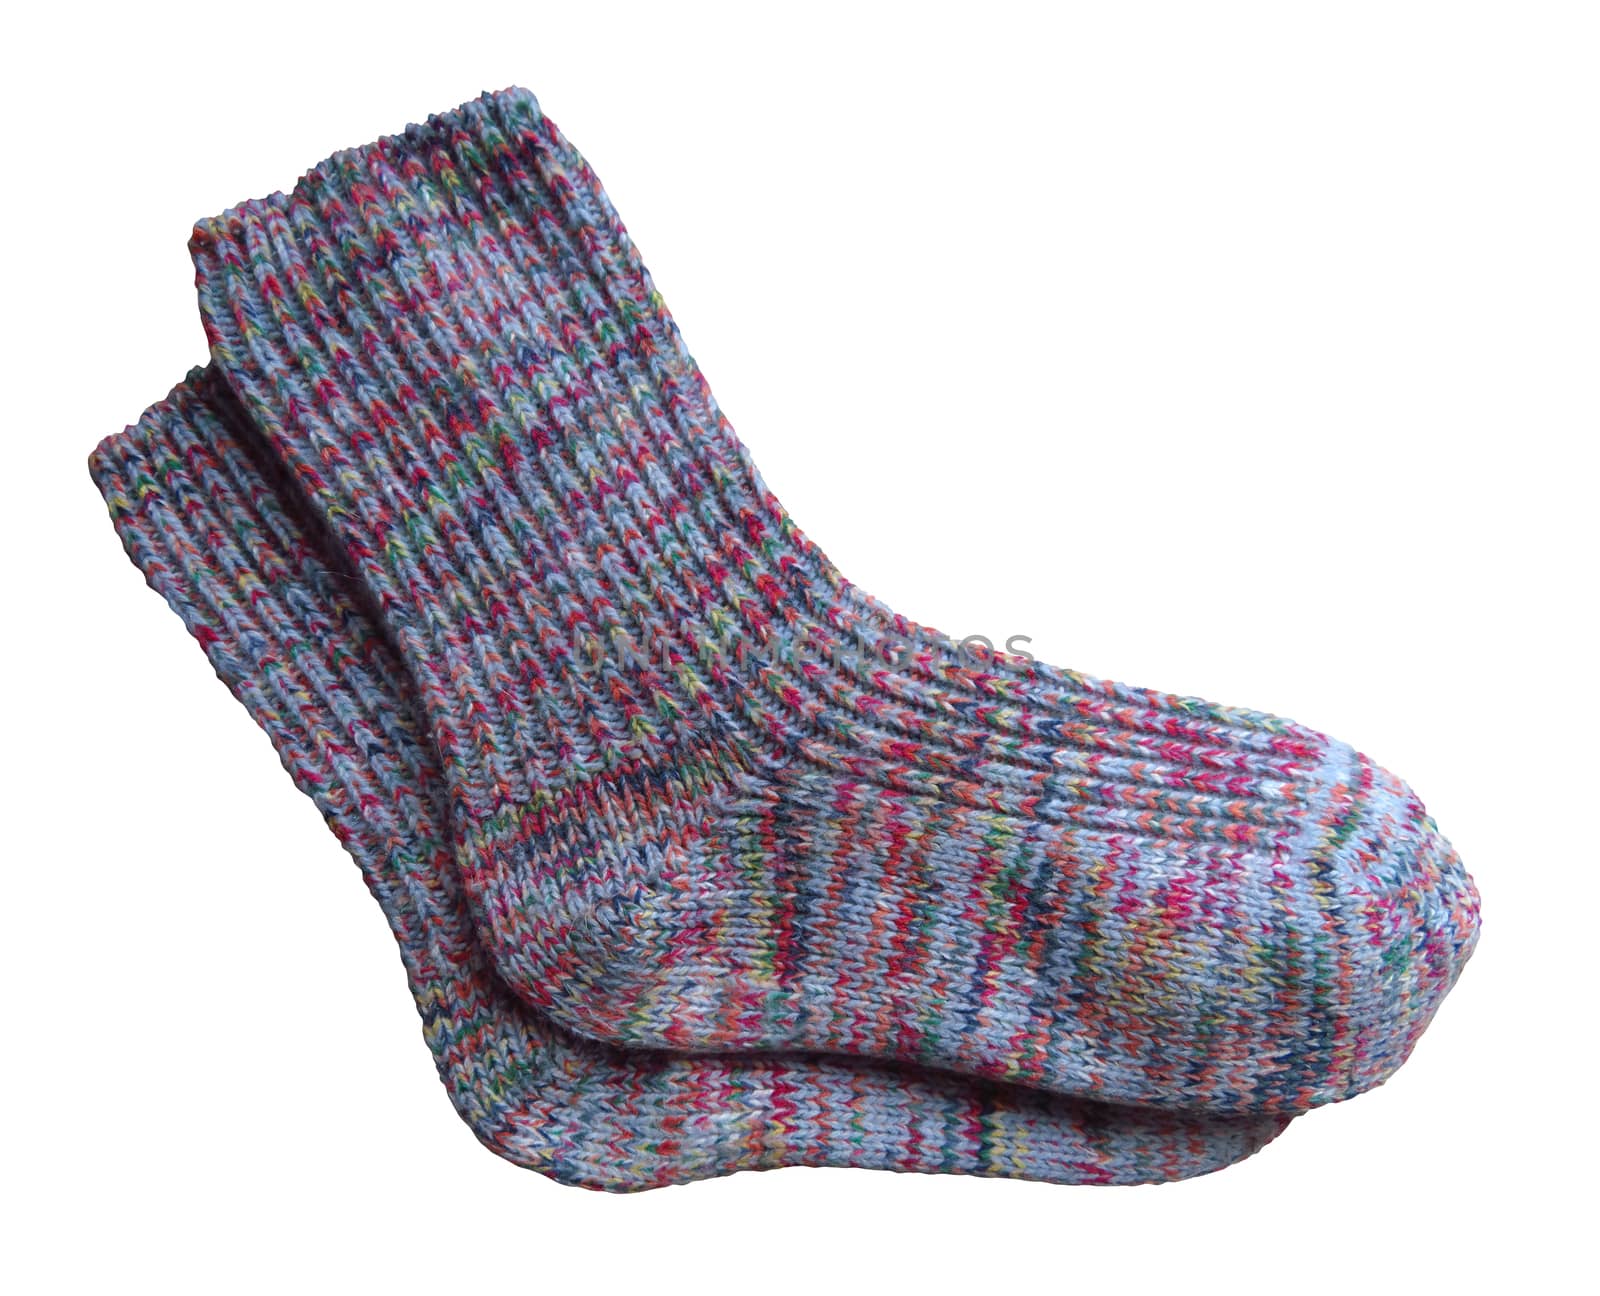 Woolen socks isolated by Venakr